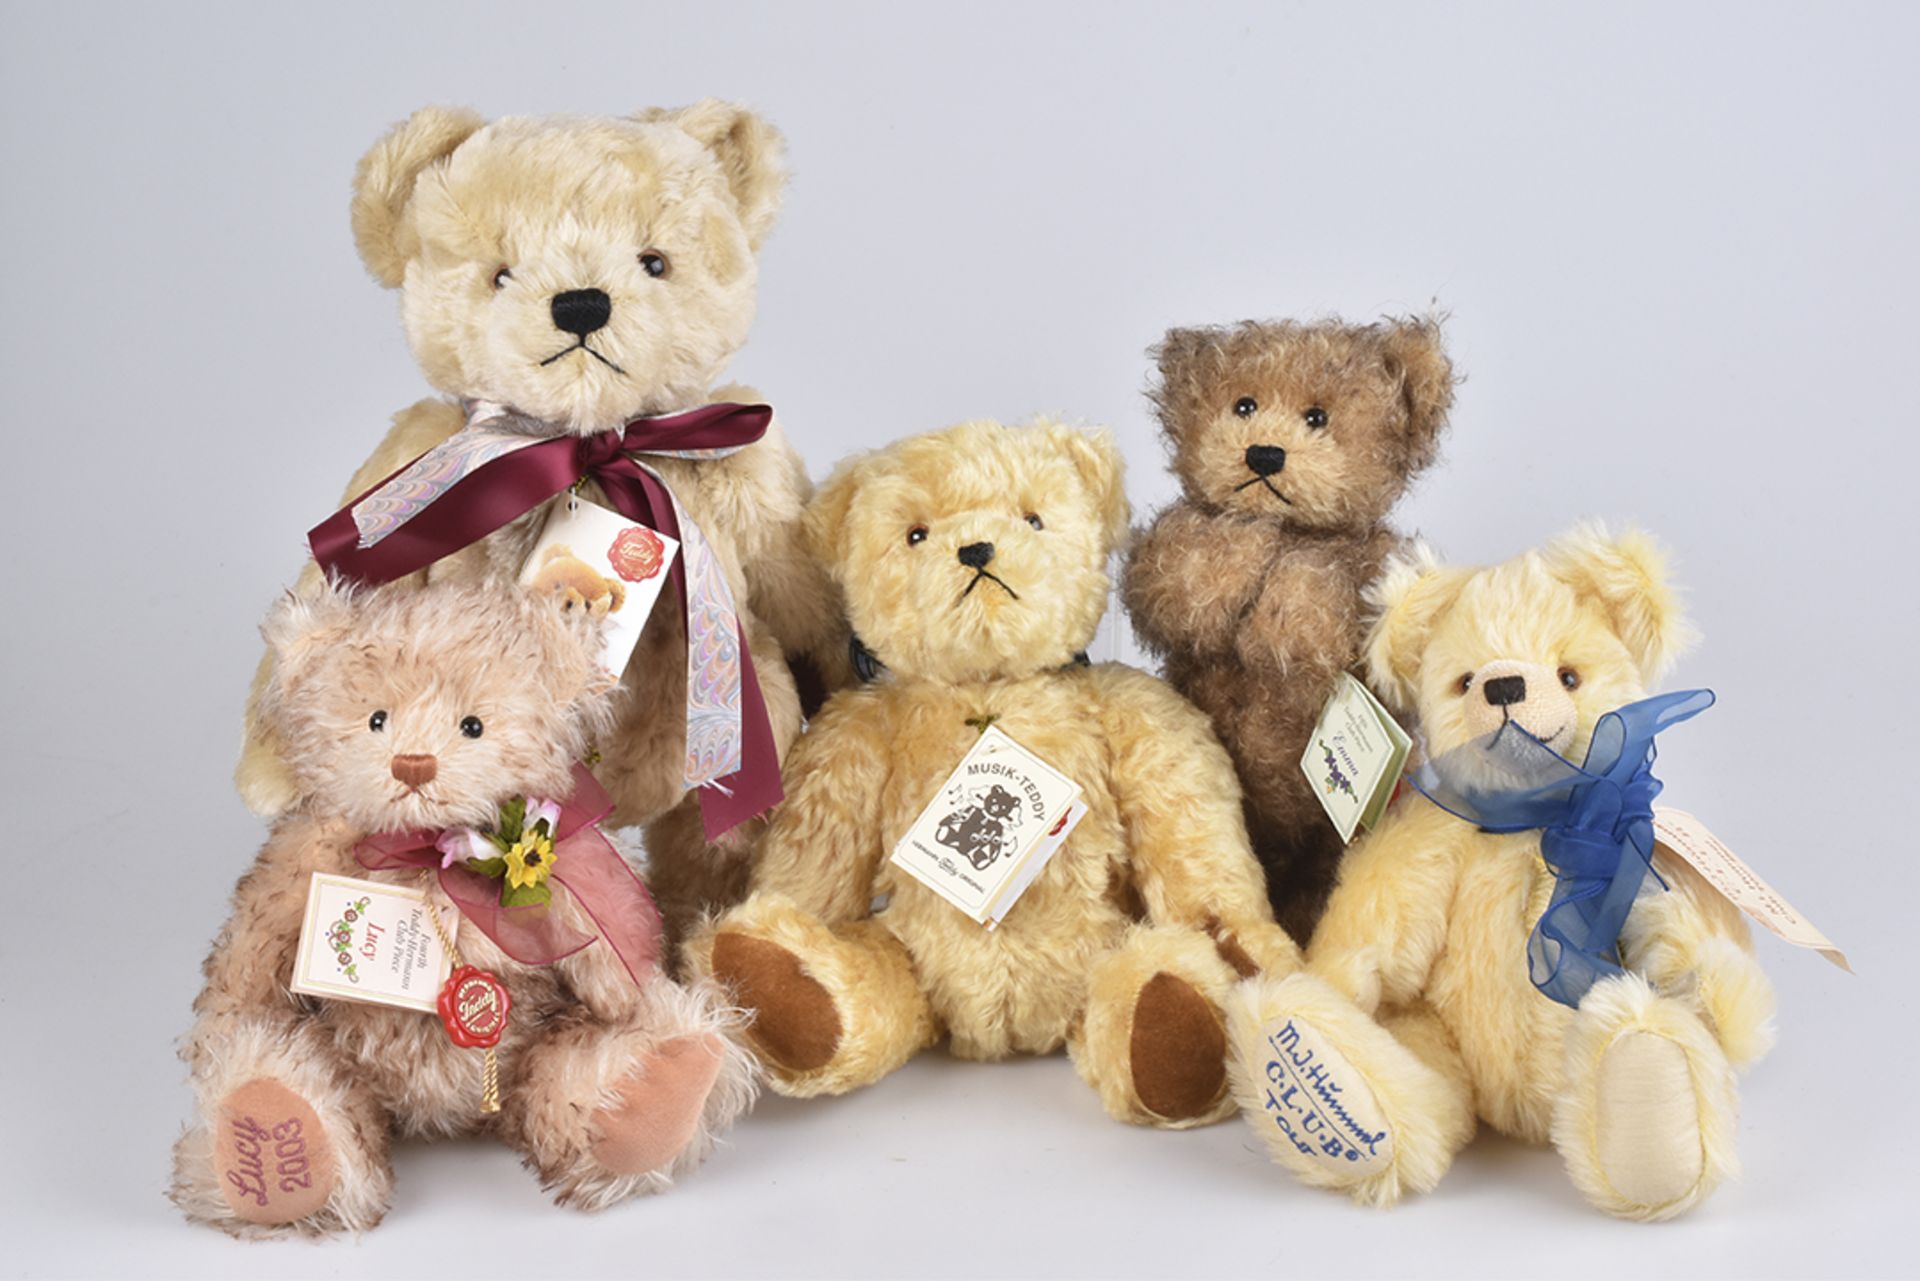 HERMANN 5 Teddybären'Emma', 'Lucy', 'M.I. Hummel', 'Musikteddy', 'U.K. Bär', limitierte Auflagen, 4x